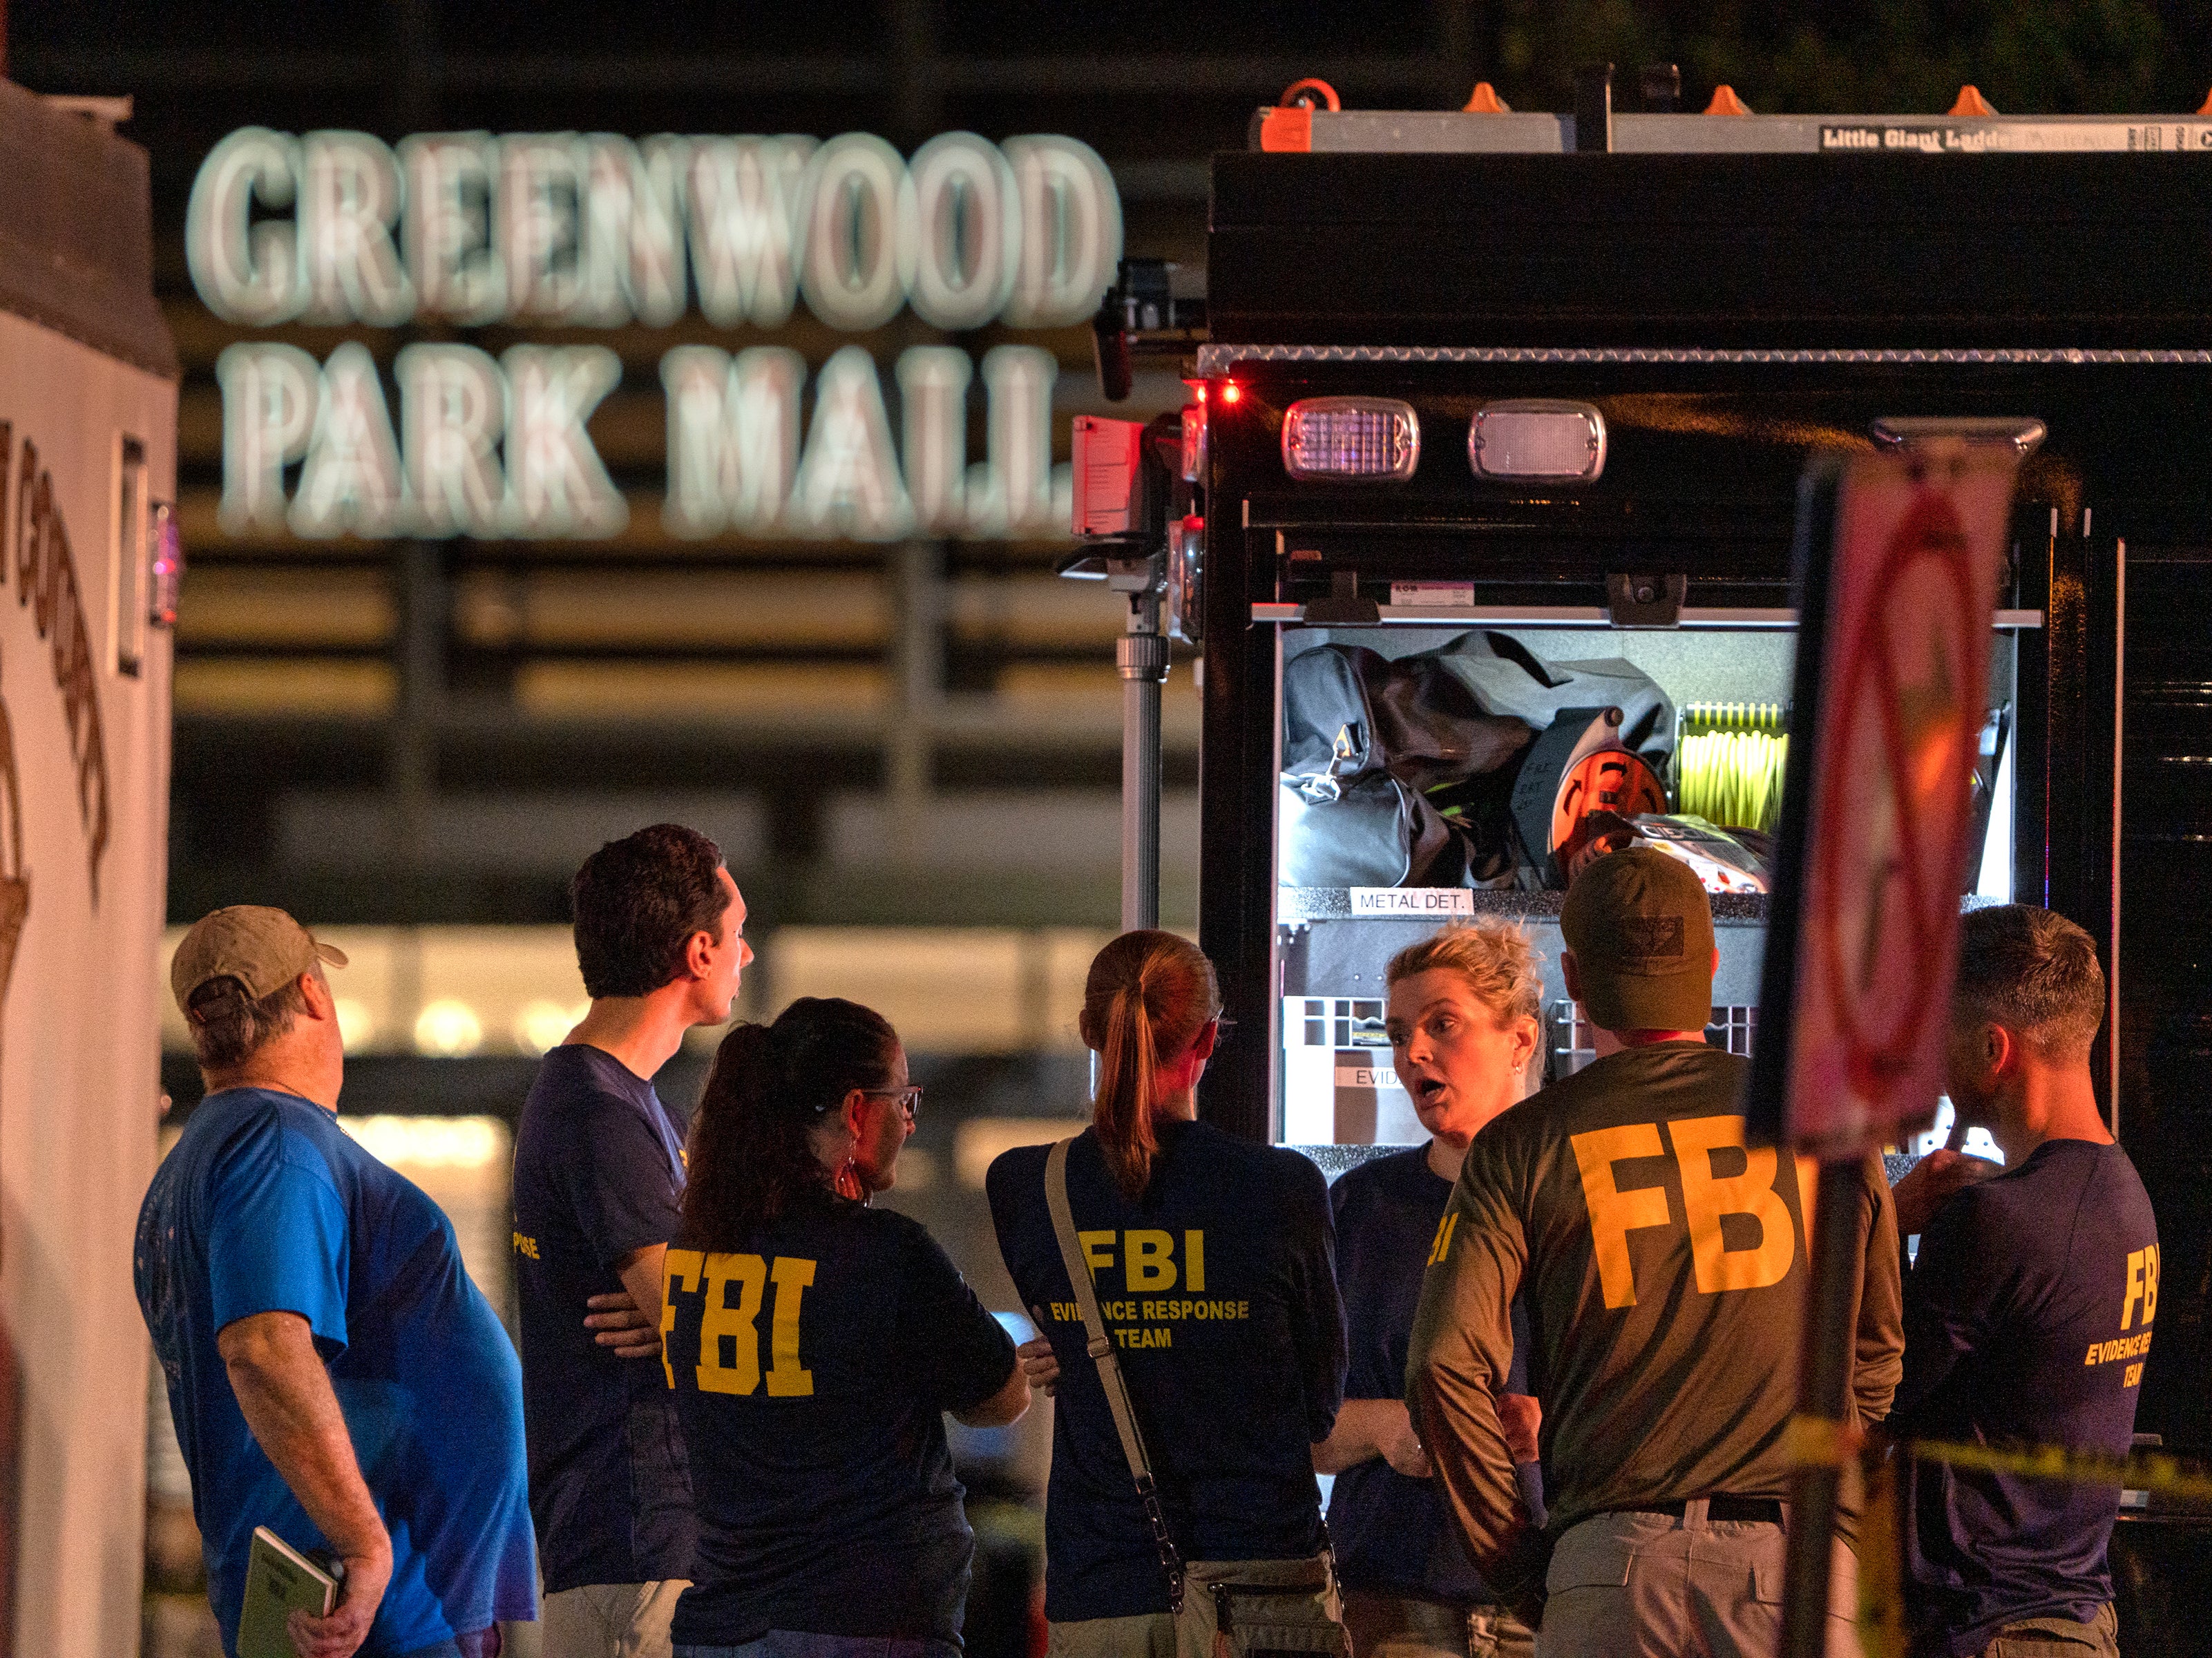 Agentes del FBI se reúnen en la escena de un tiroteo mortal, el domingo 17 de julio de 2022, en el Greenwood Park Mall, en Greenwood, Indiana